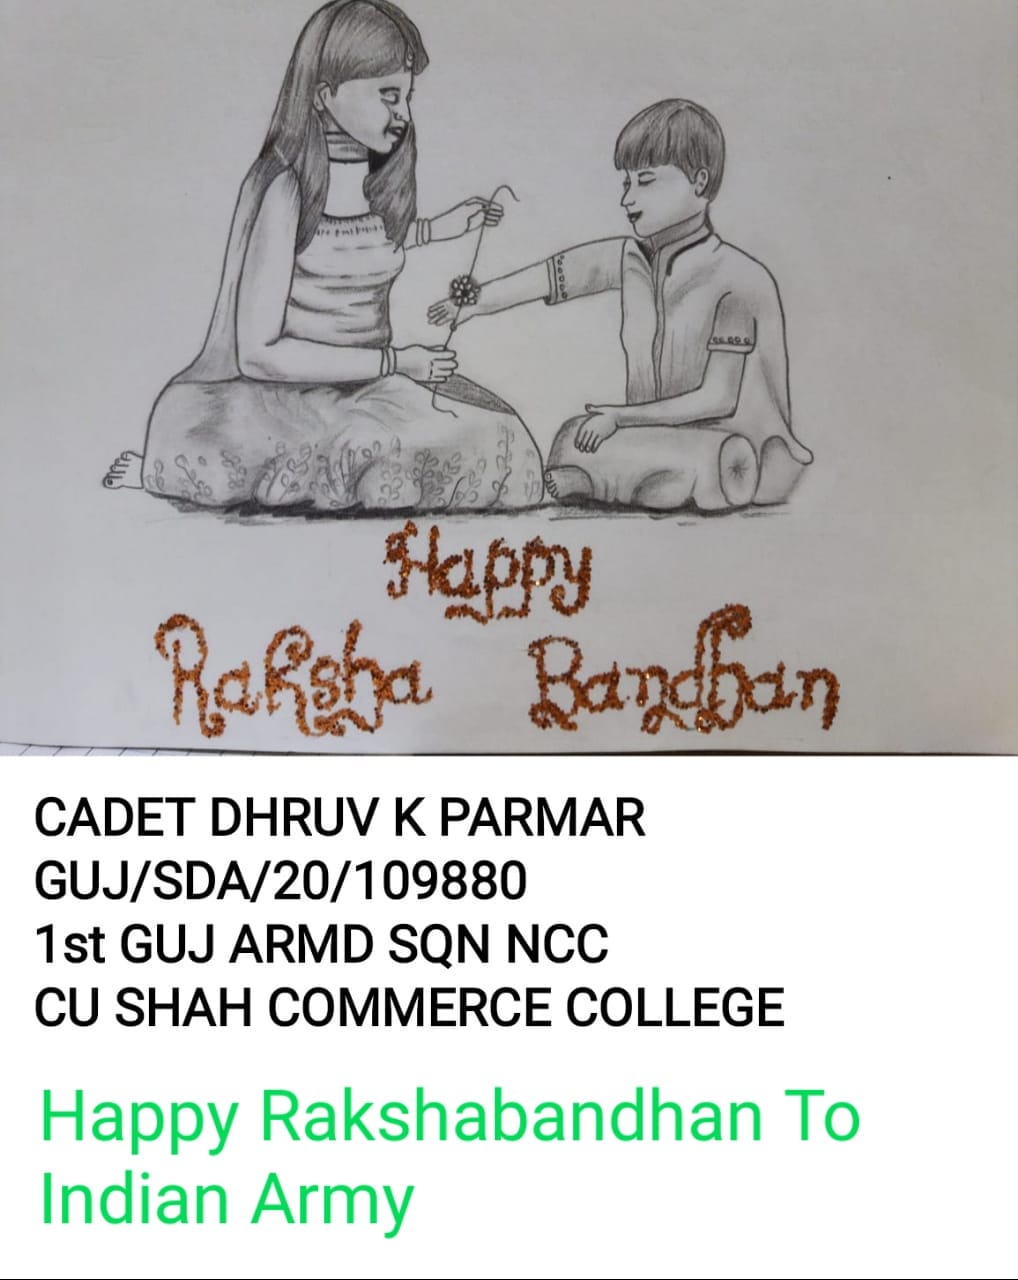 Subhadra tying rakhi to krishna on raksha bandhan. Illustration of subhadra  tying rakhi to krishna with message in hindi | CanStock